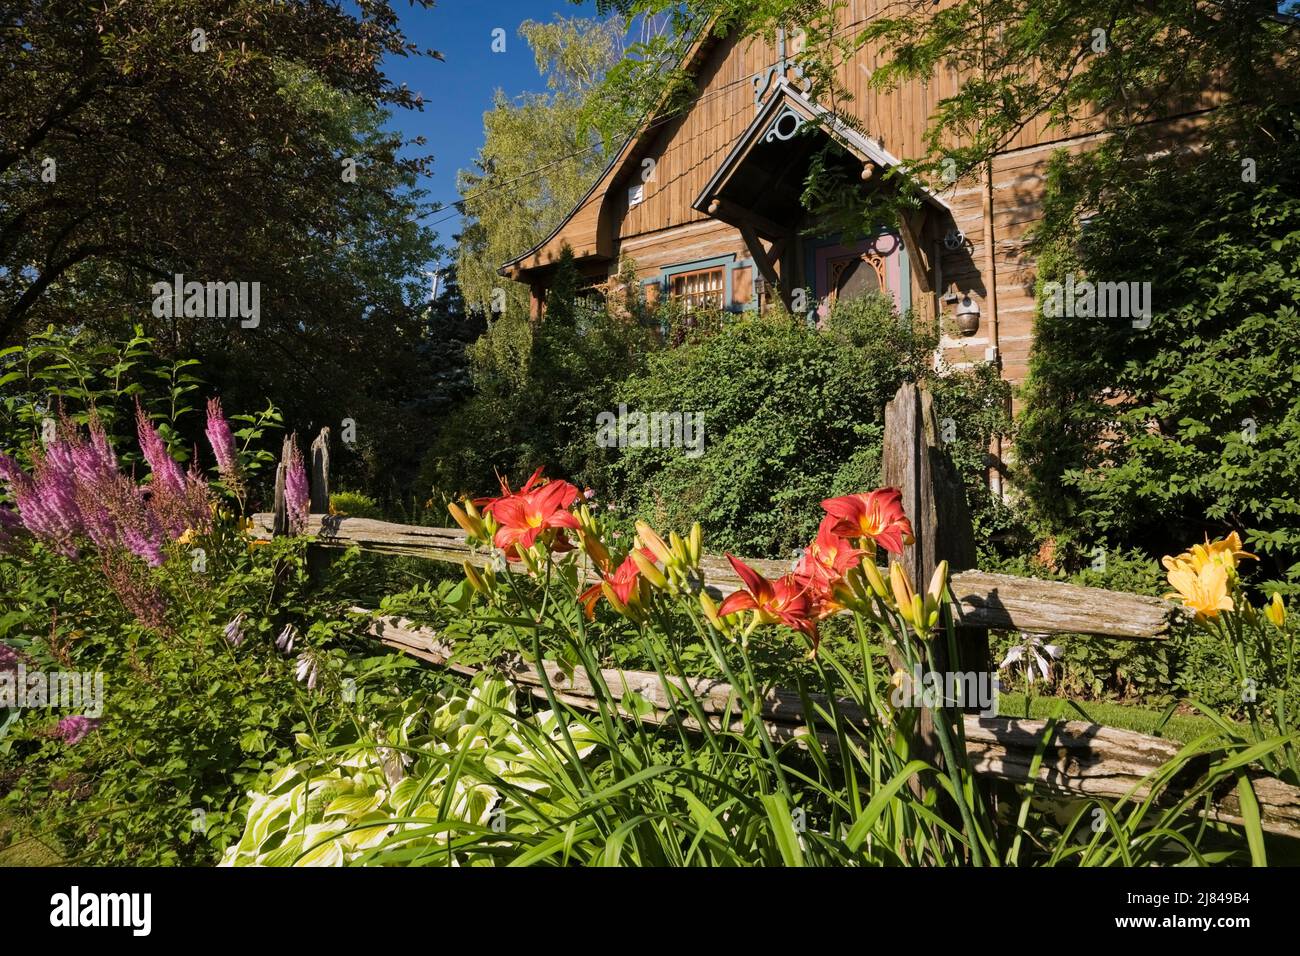 Mixed Hemerocallis - Daylily flowers, Hosta in backyard border in summer. Stock Photo